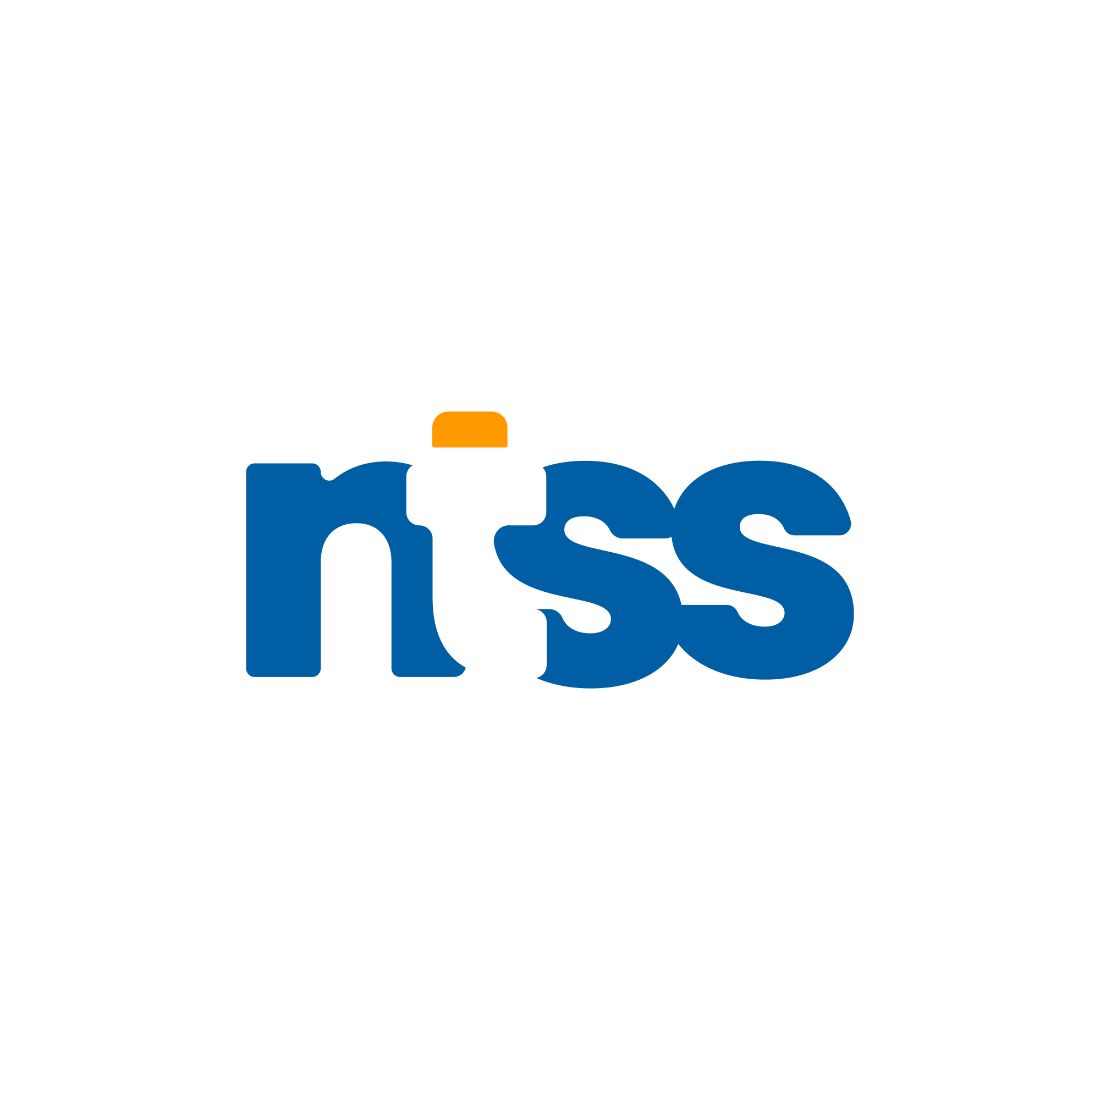 Ntss Letter Logo Design preview image.